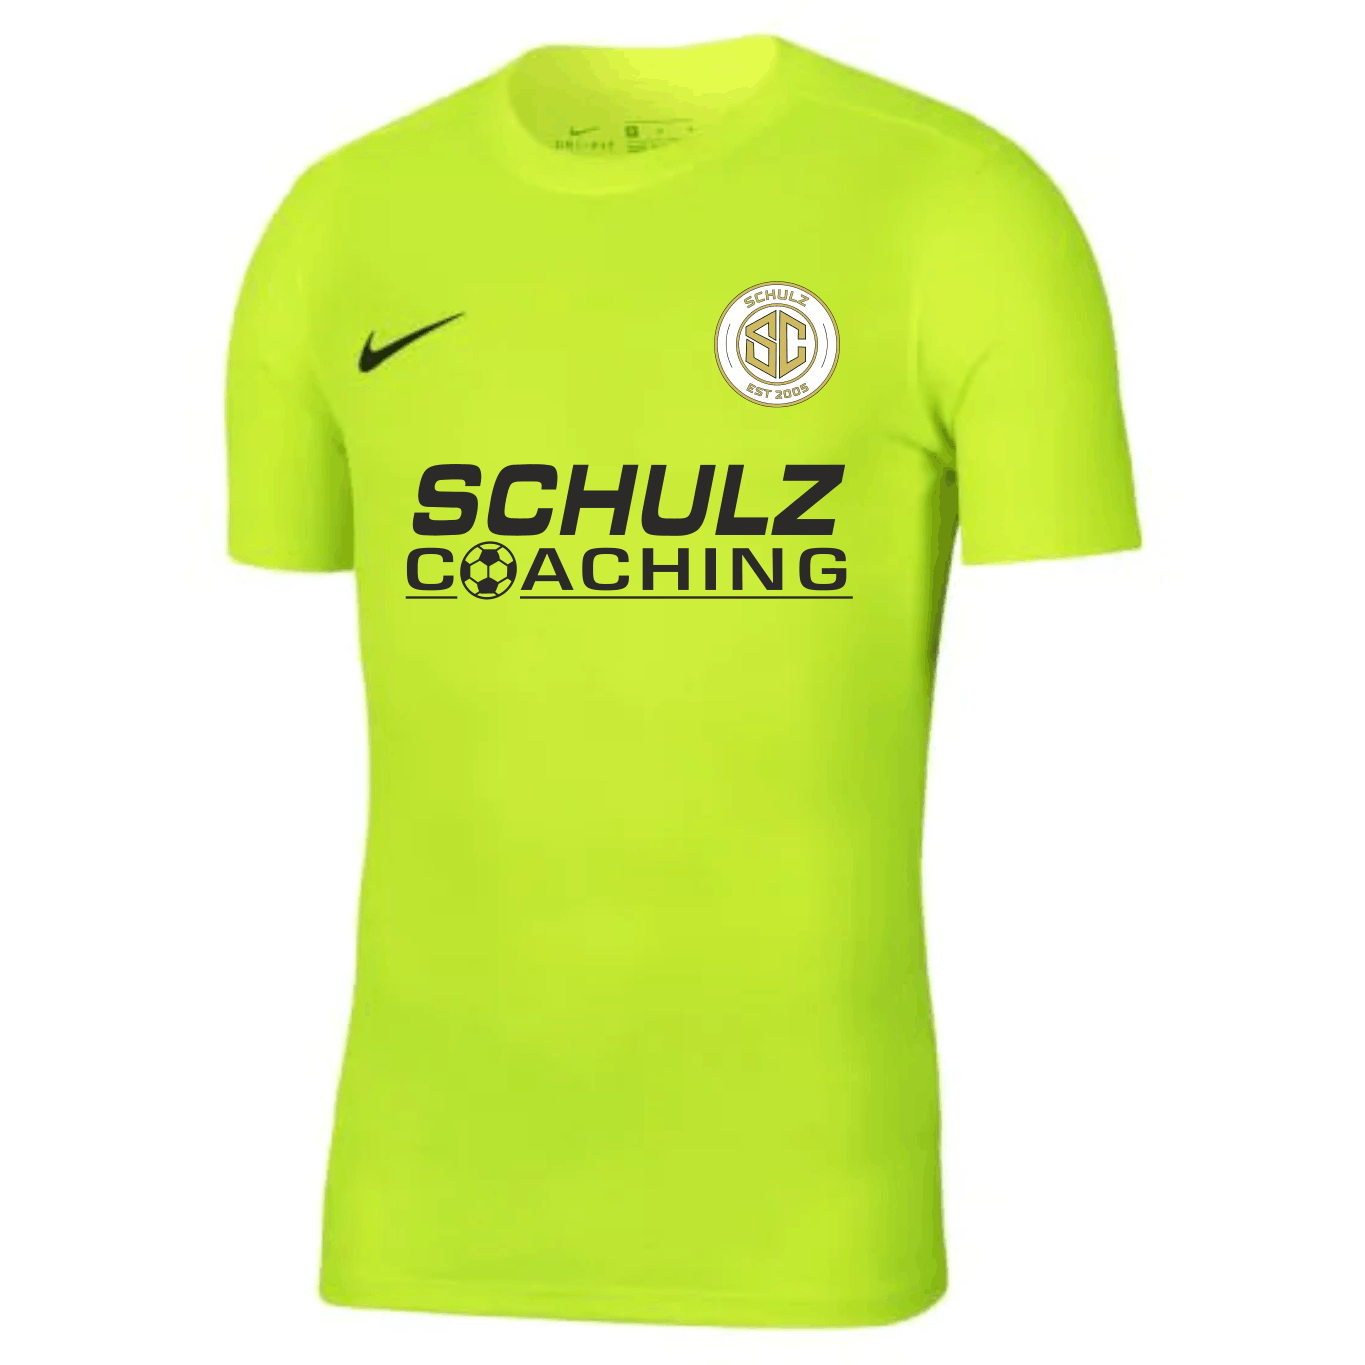 Schulz Coaching - Park VII Kit